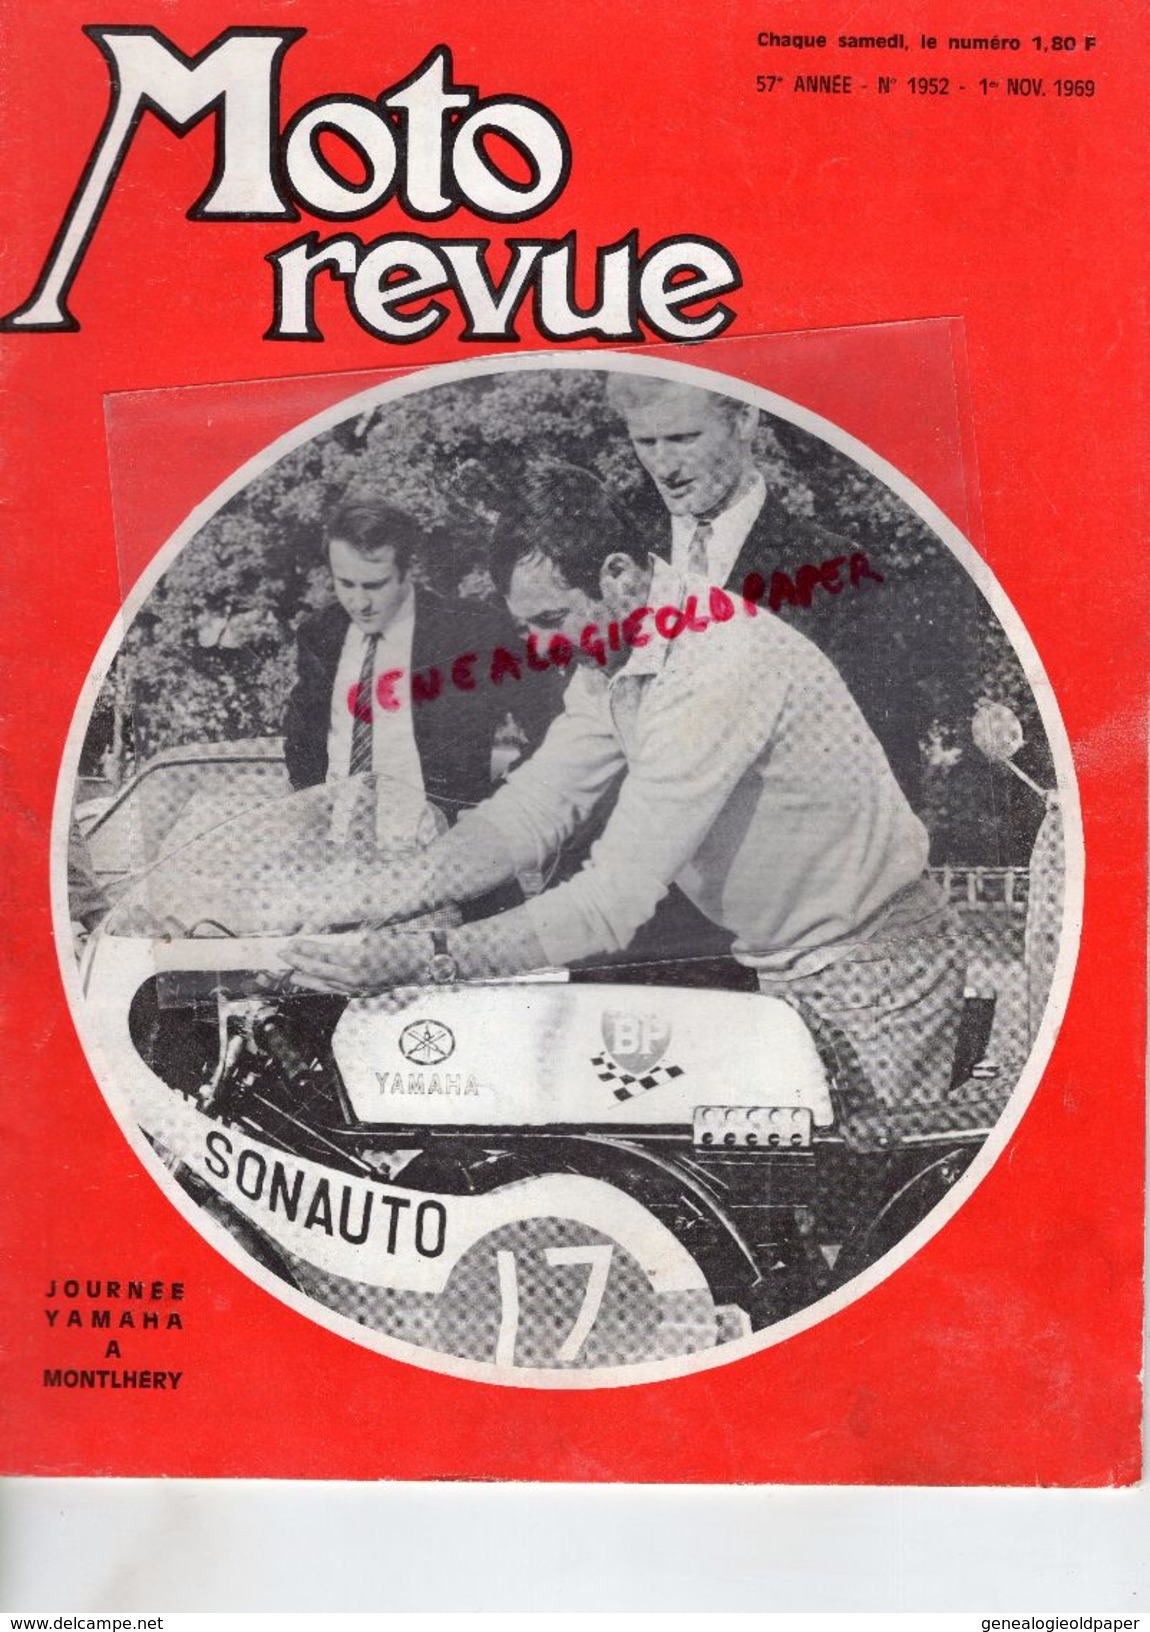 MOTO REVUE - 1-11-1969- N° 1952- YAMAHA A MONTLHERY-247 TRIAL MONTESA- PUY DE DOME- KAWASAKI A1R-VIRY CHATILLON-TRIUMPH - Moto